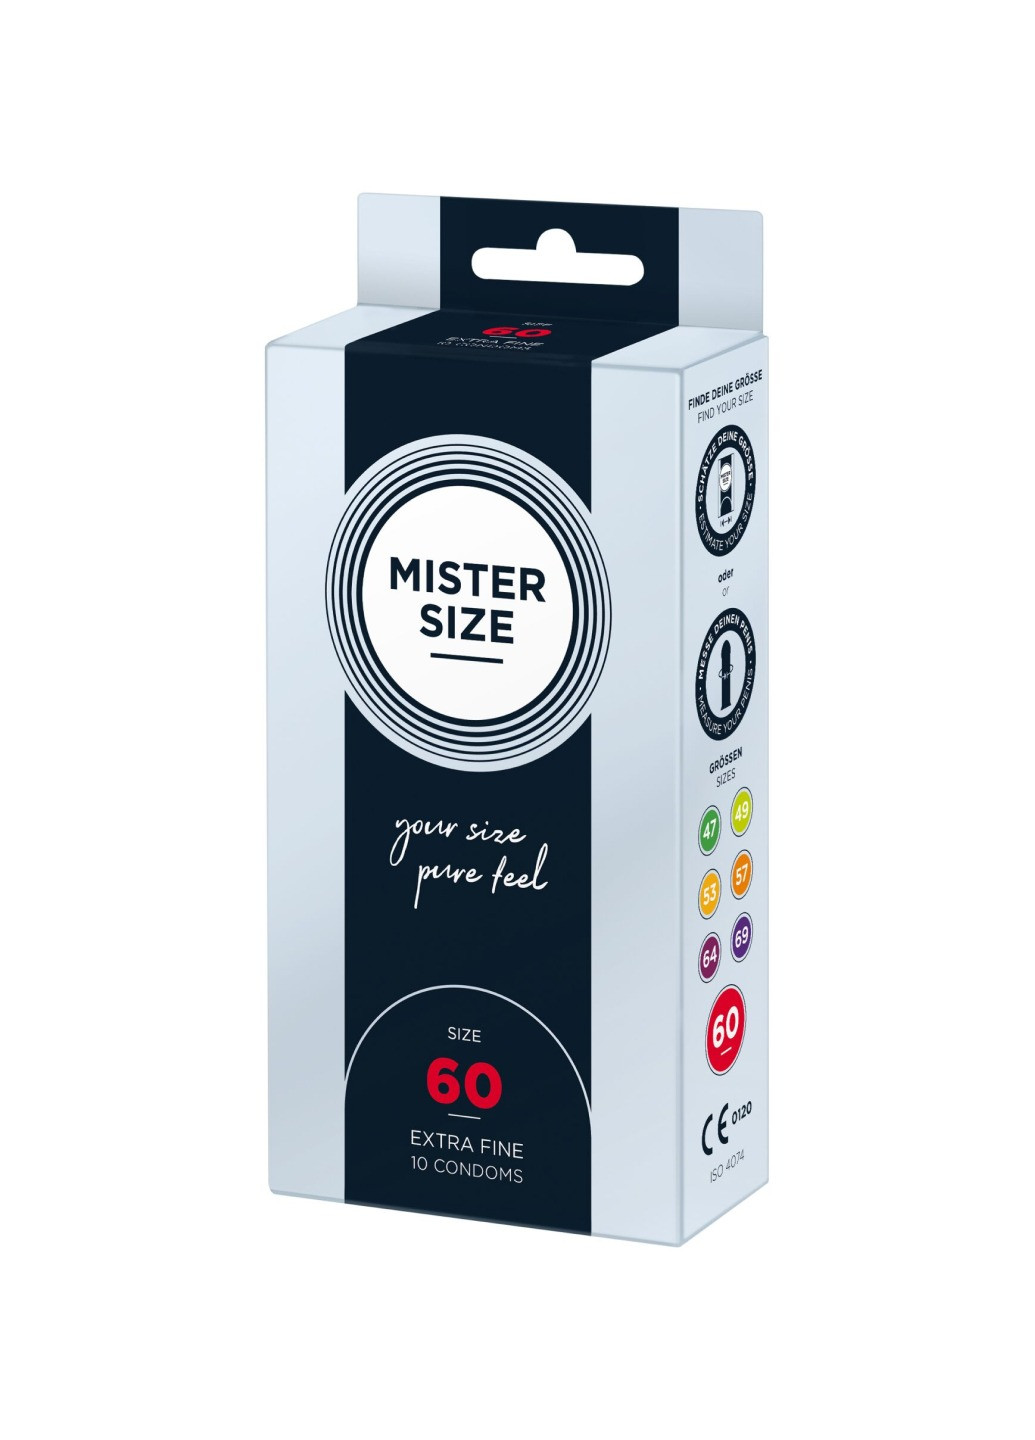 Презервативи Mister Size - pure feel - 60 (10 condoms), товщина 0,05 мм No Brand (276905764)